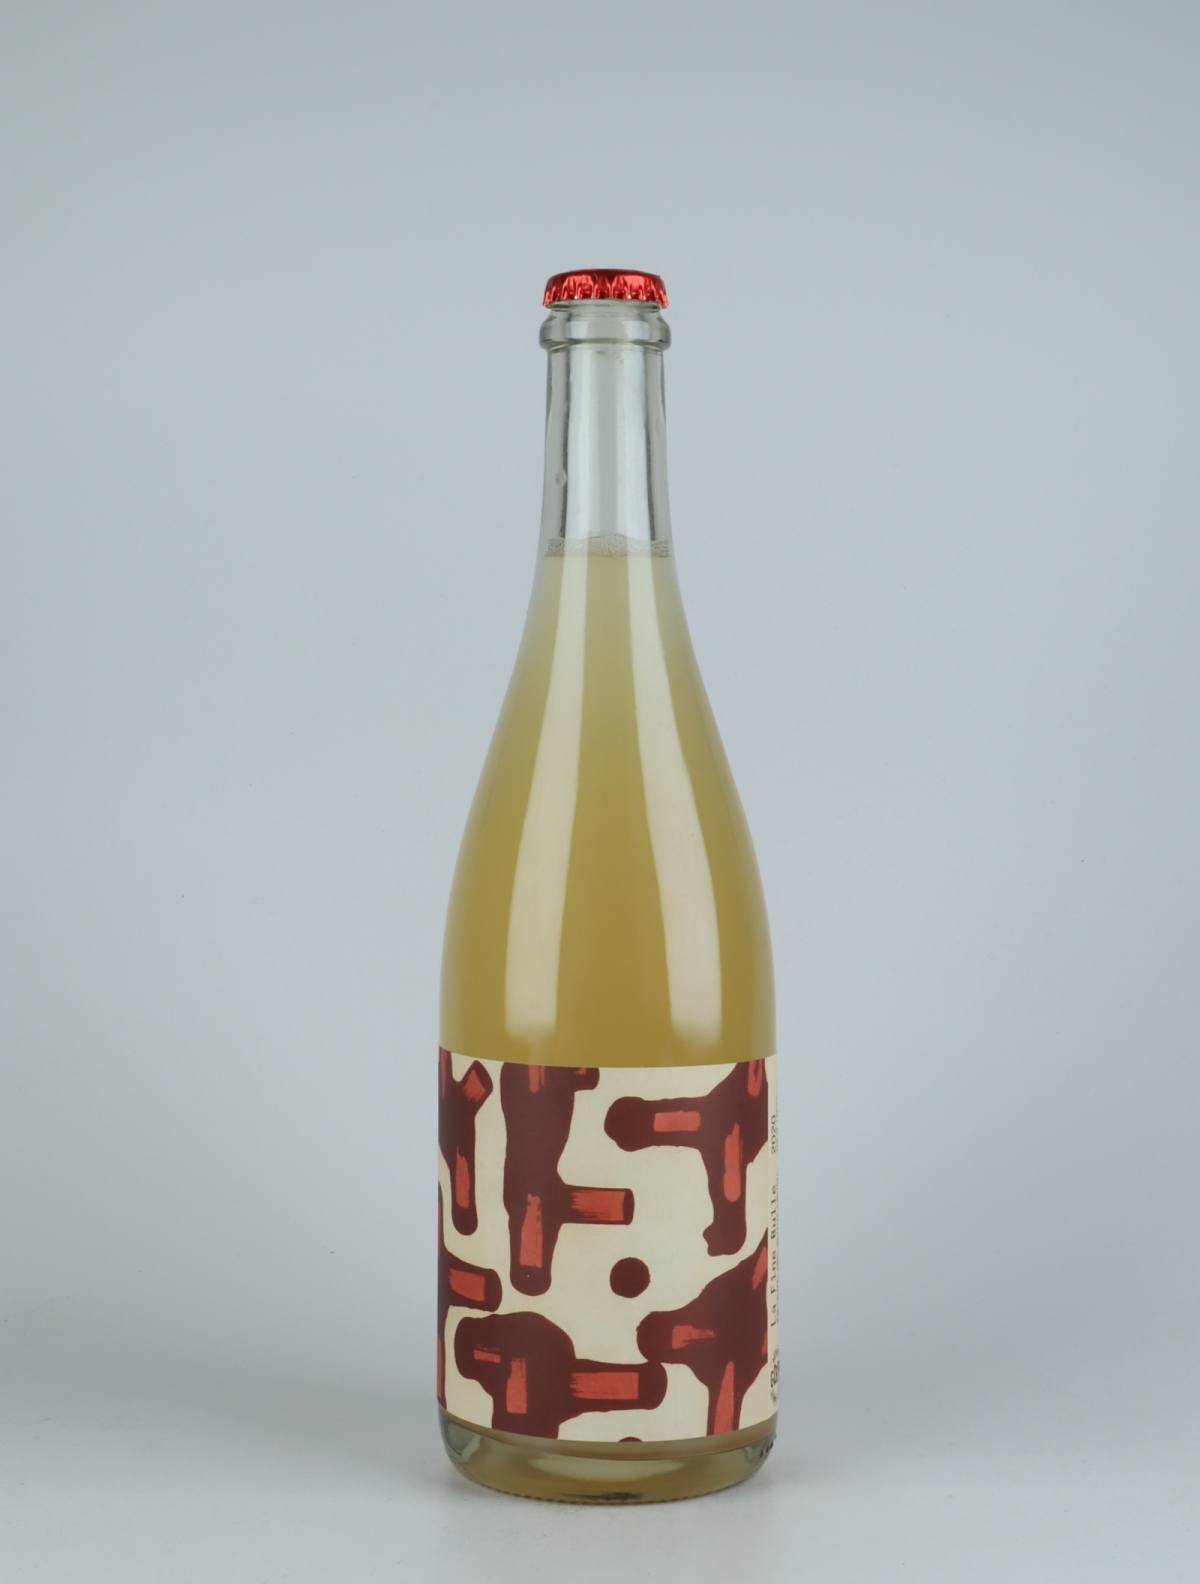 A bottle 2020 La Fine Bulle Sparkling from , Alsace in France